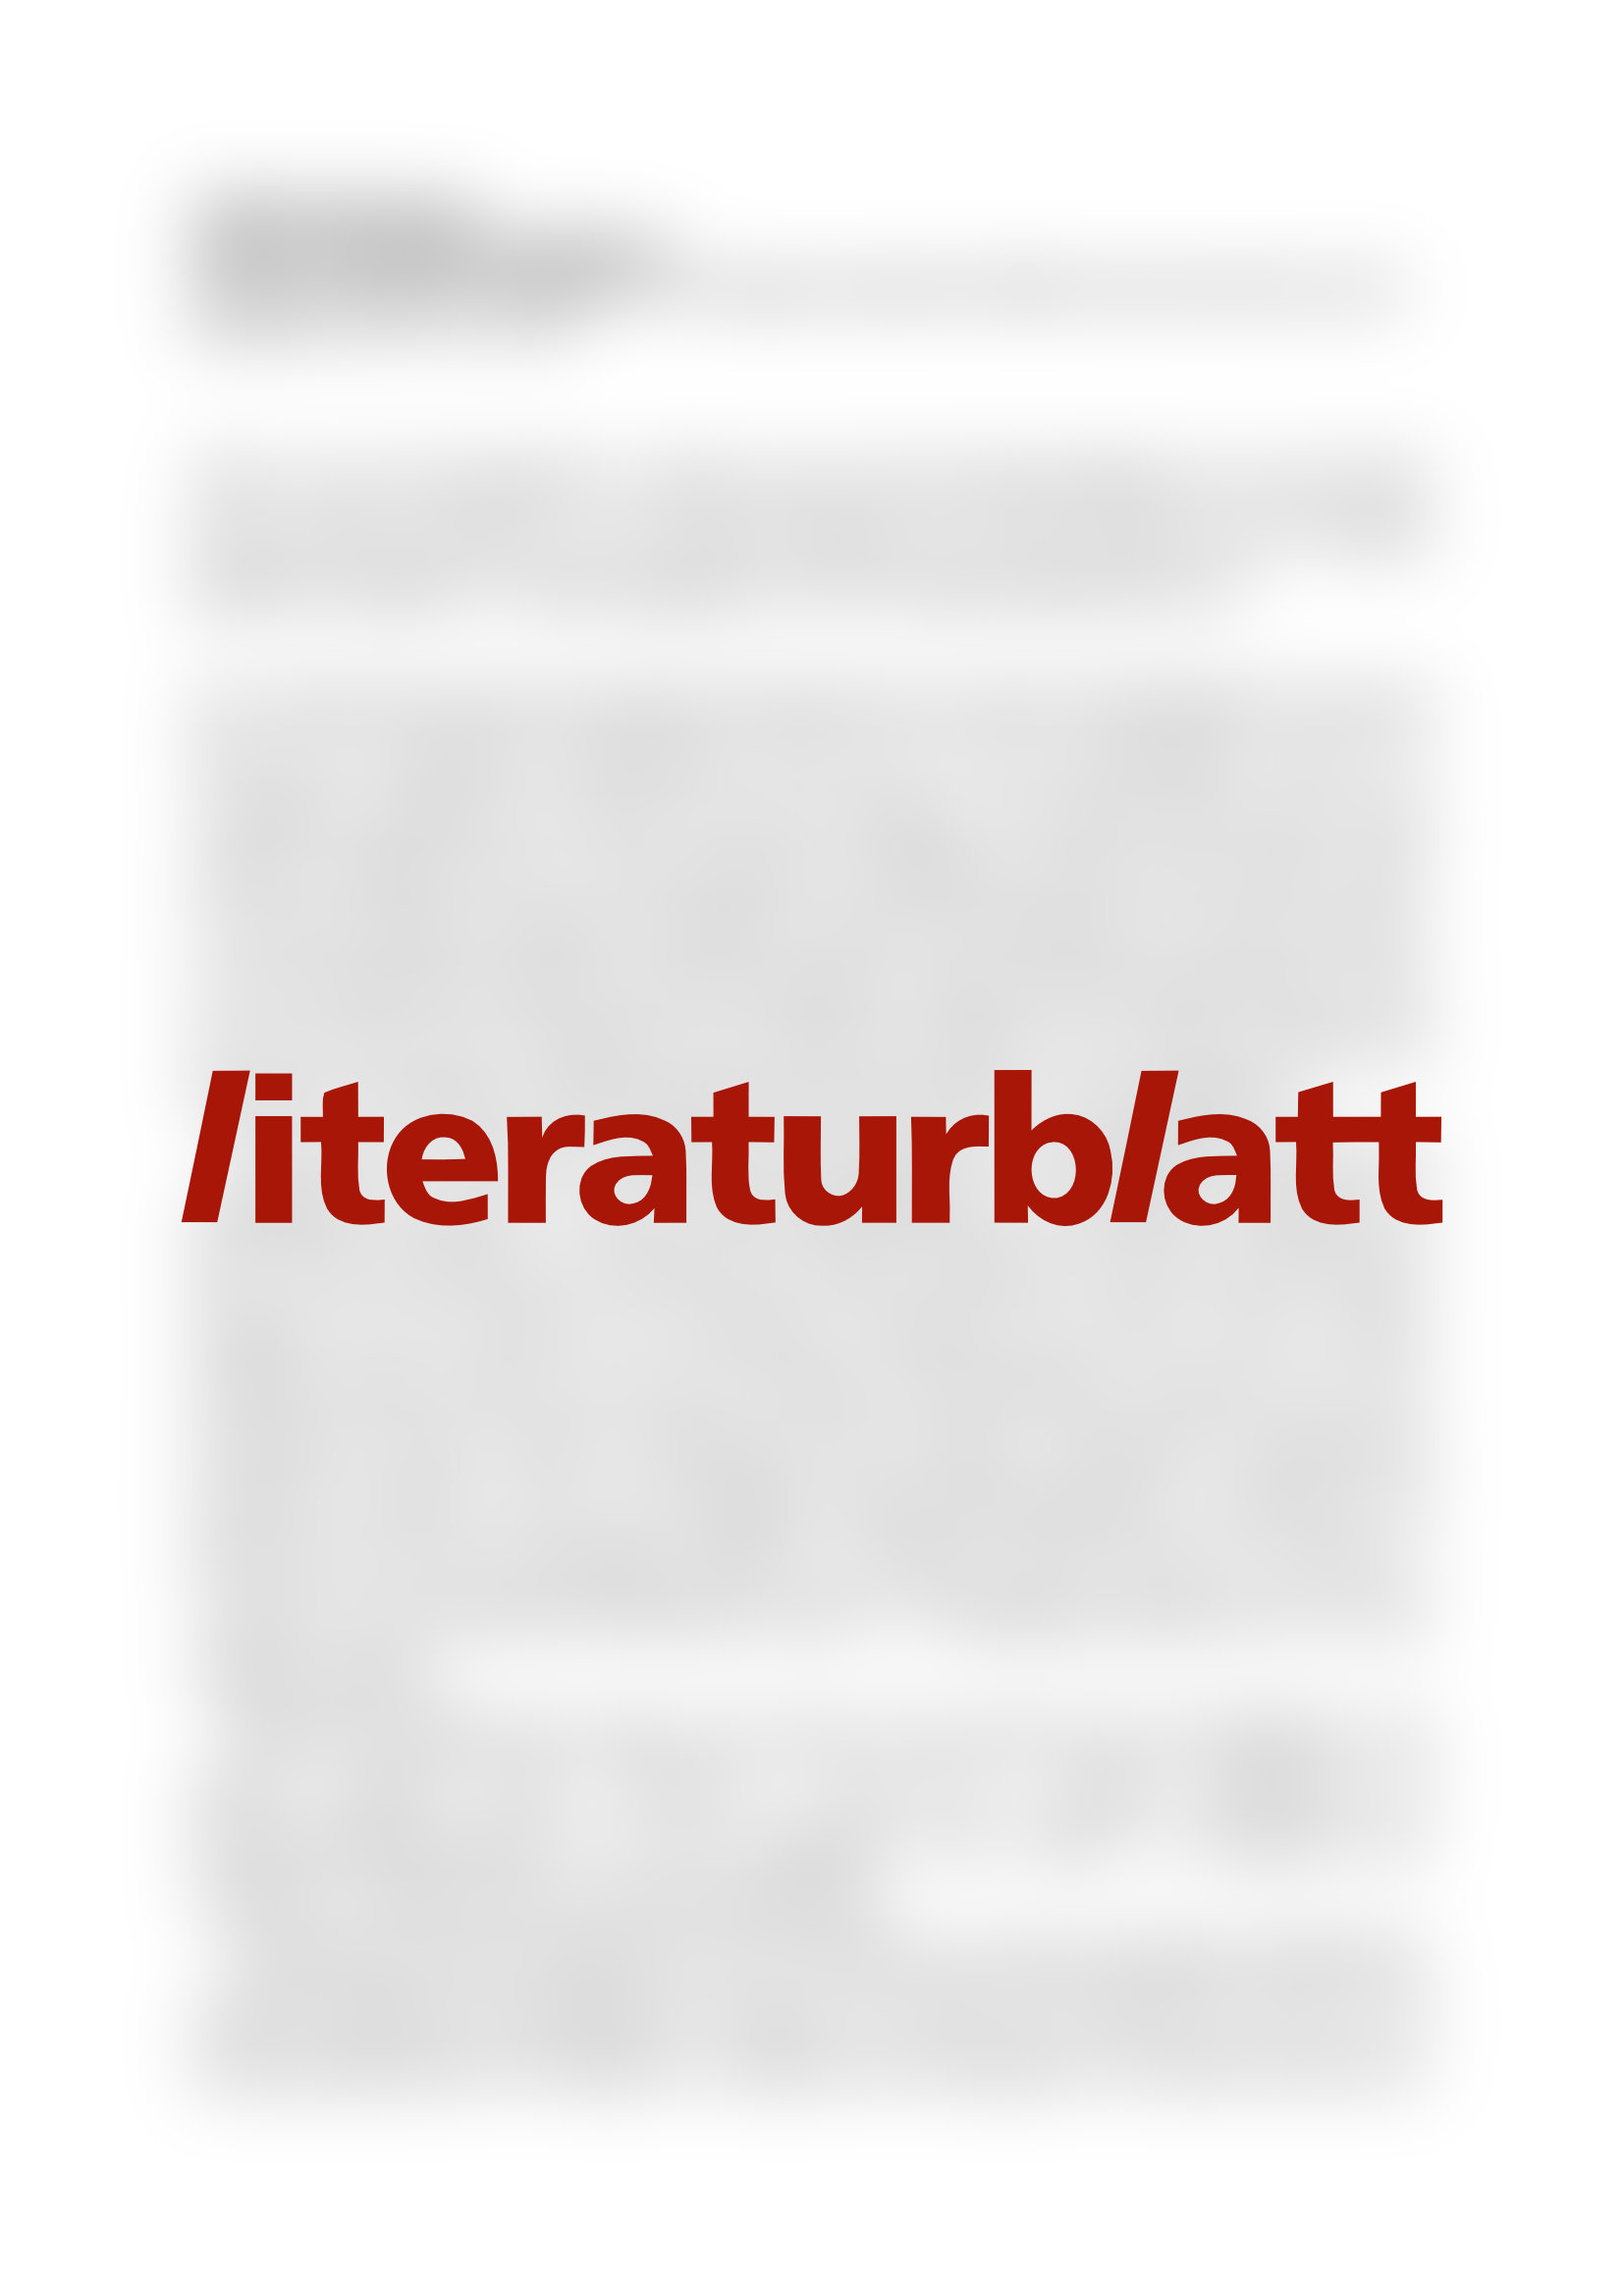 Vorschau - Literaturblatt